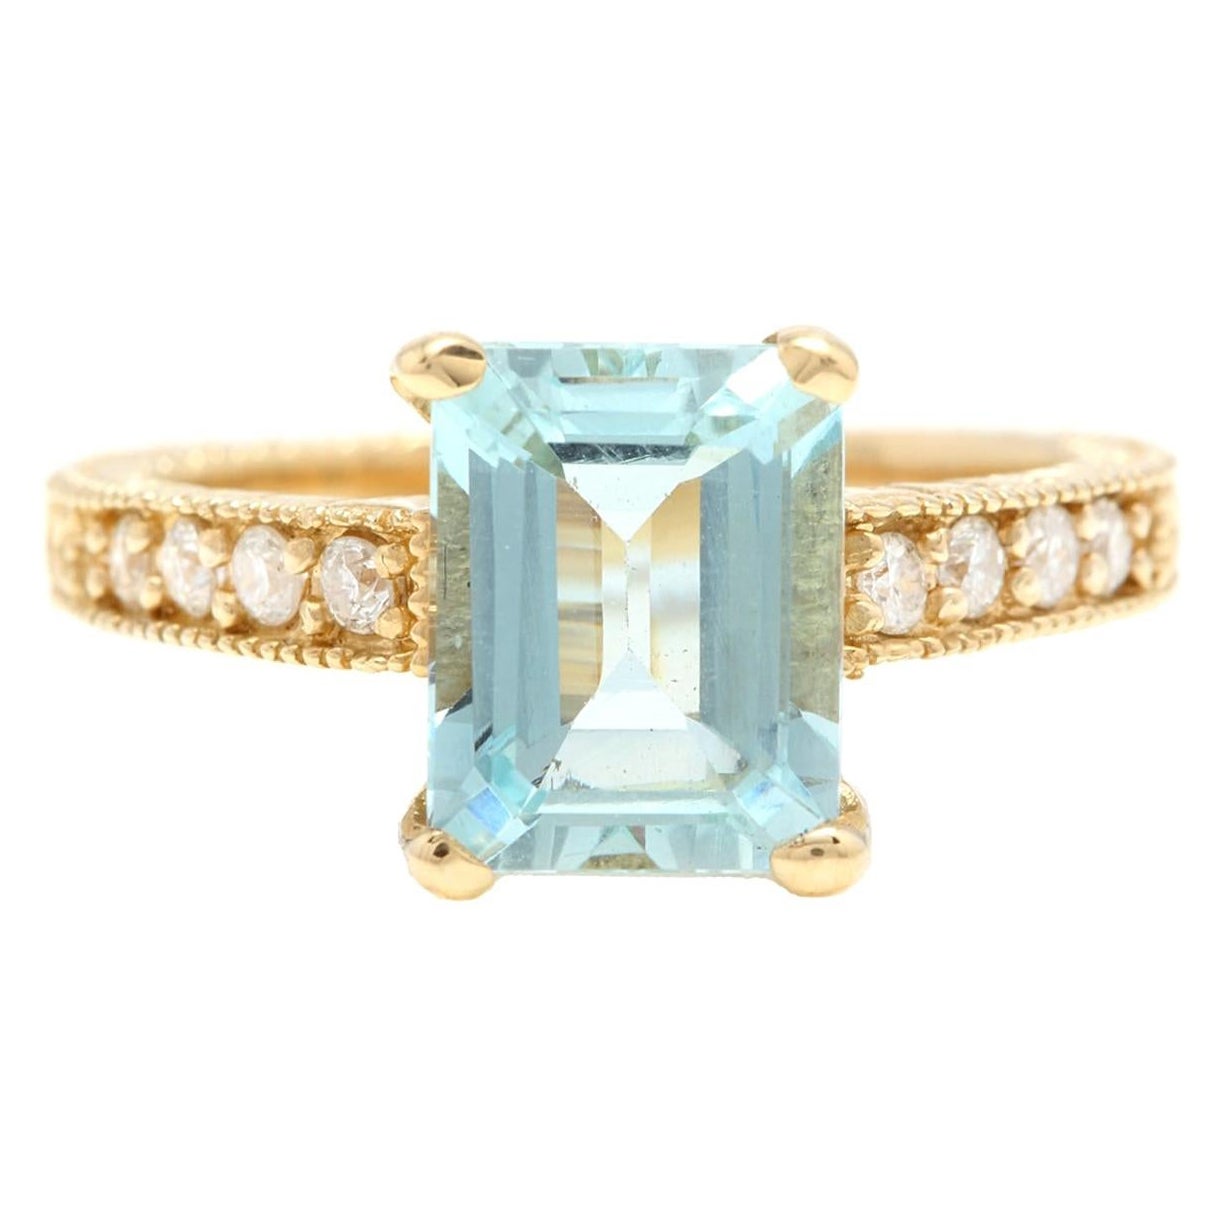 3.20 Carats Impressive Natural Aquamarine and Diamond 14K Yellow Gold Ring